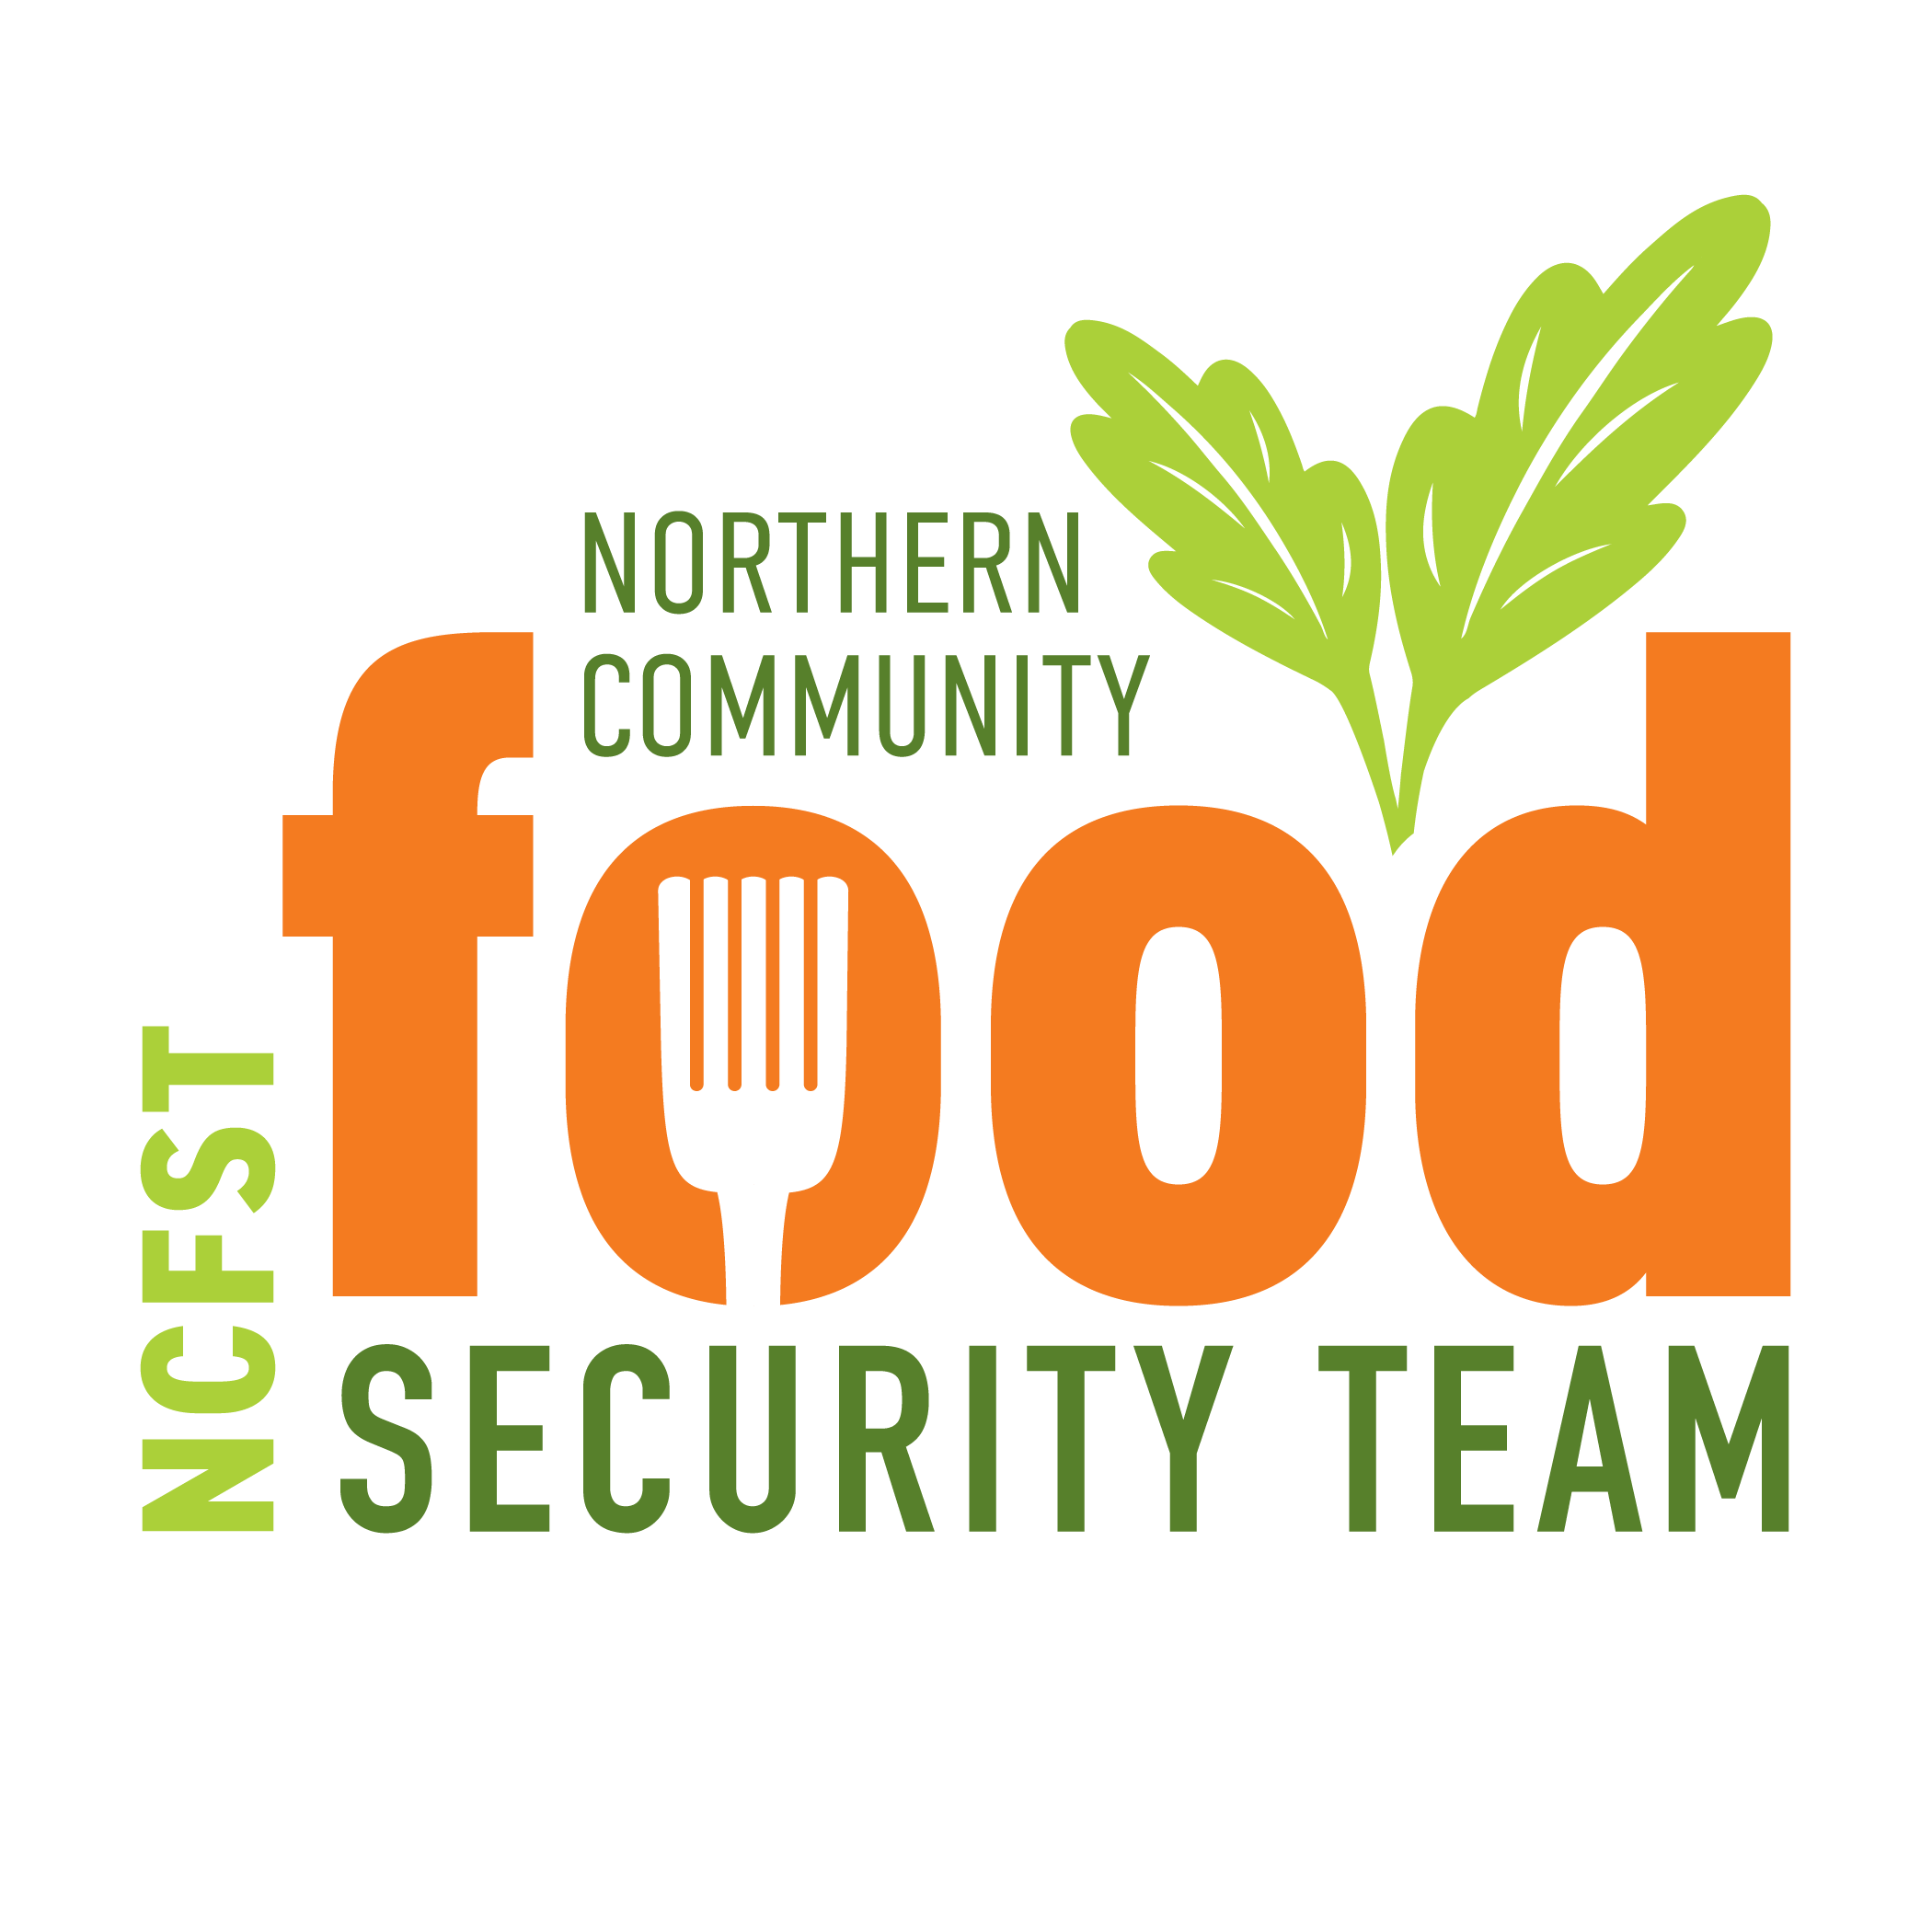 Northern Community Food Security Team